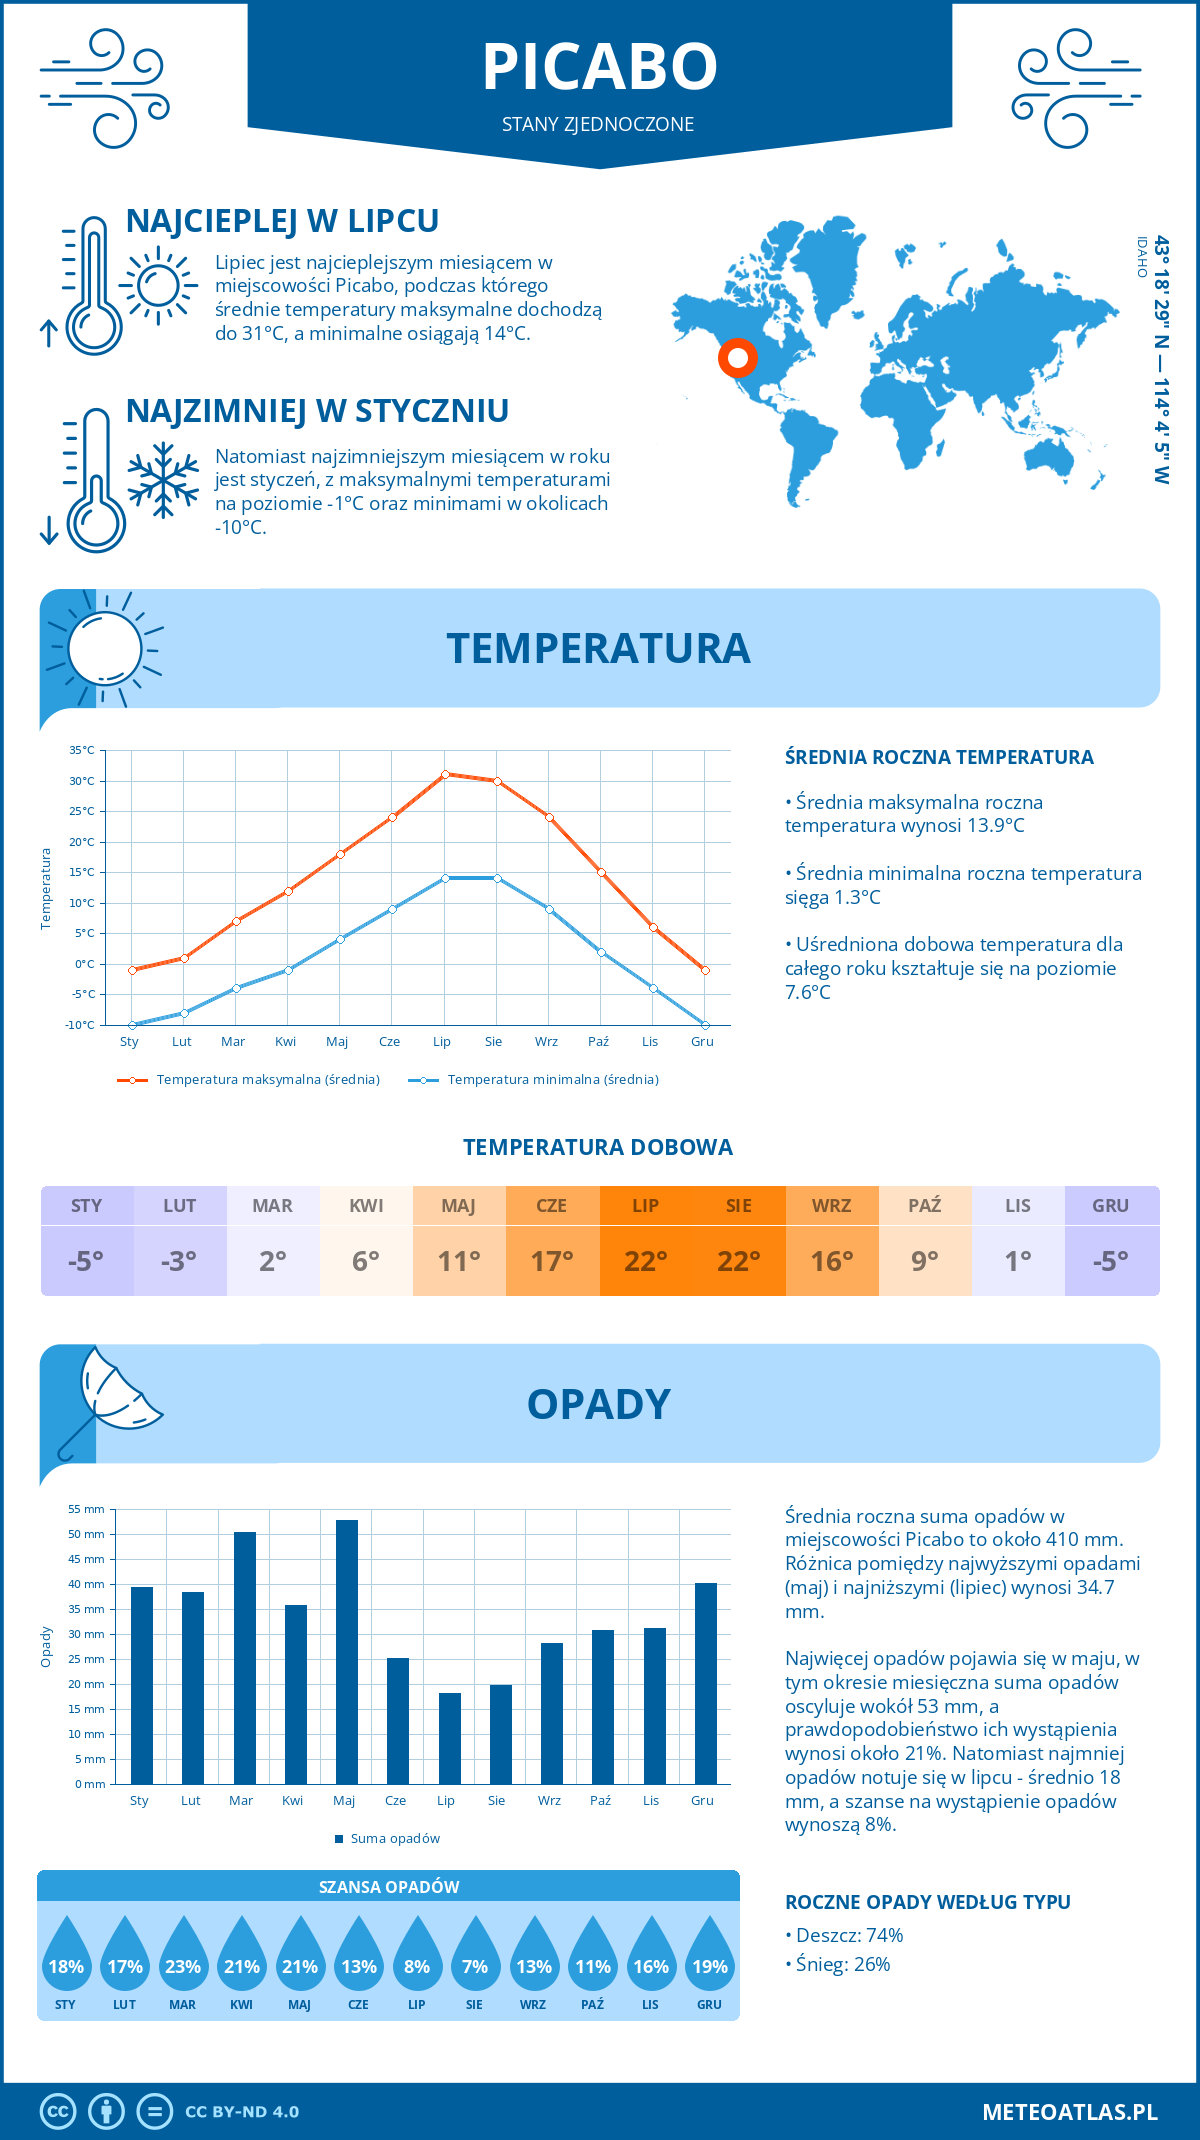 Pogoda Picabo (Stany Zjednoczone). Temperatura oraz opady.